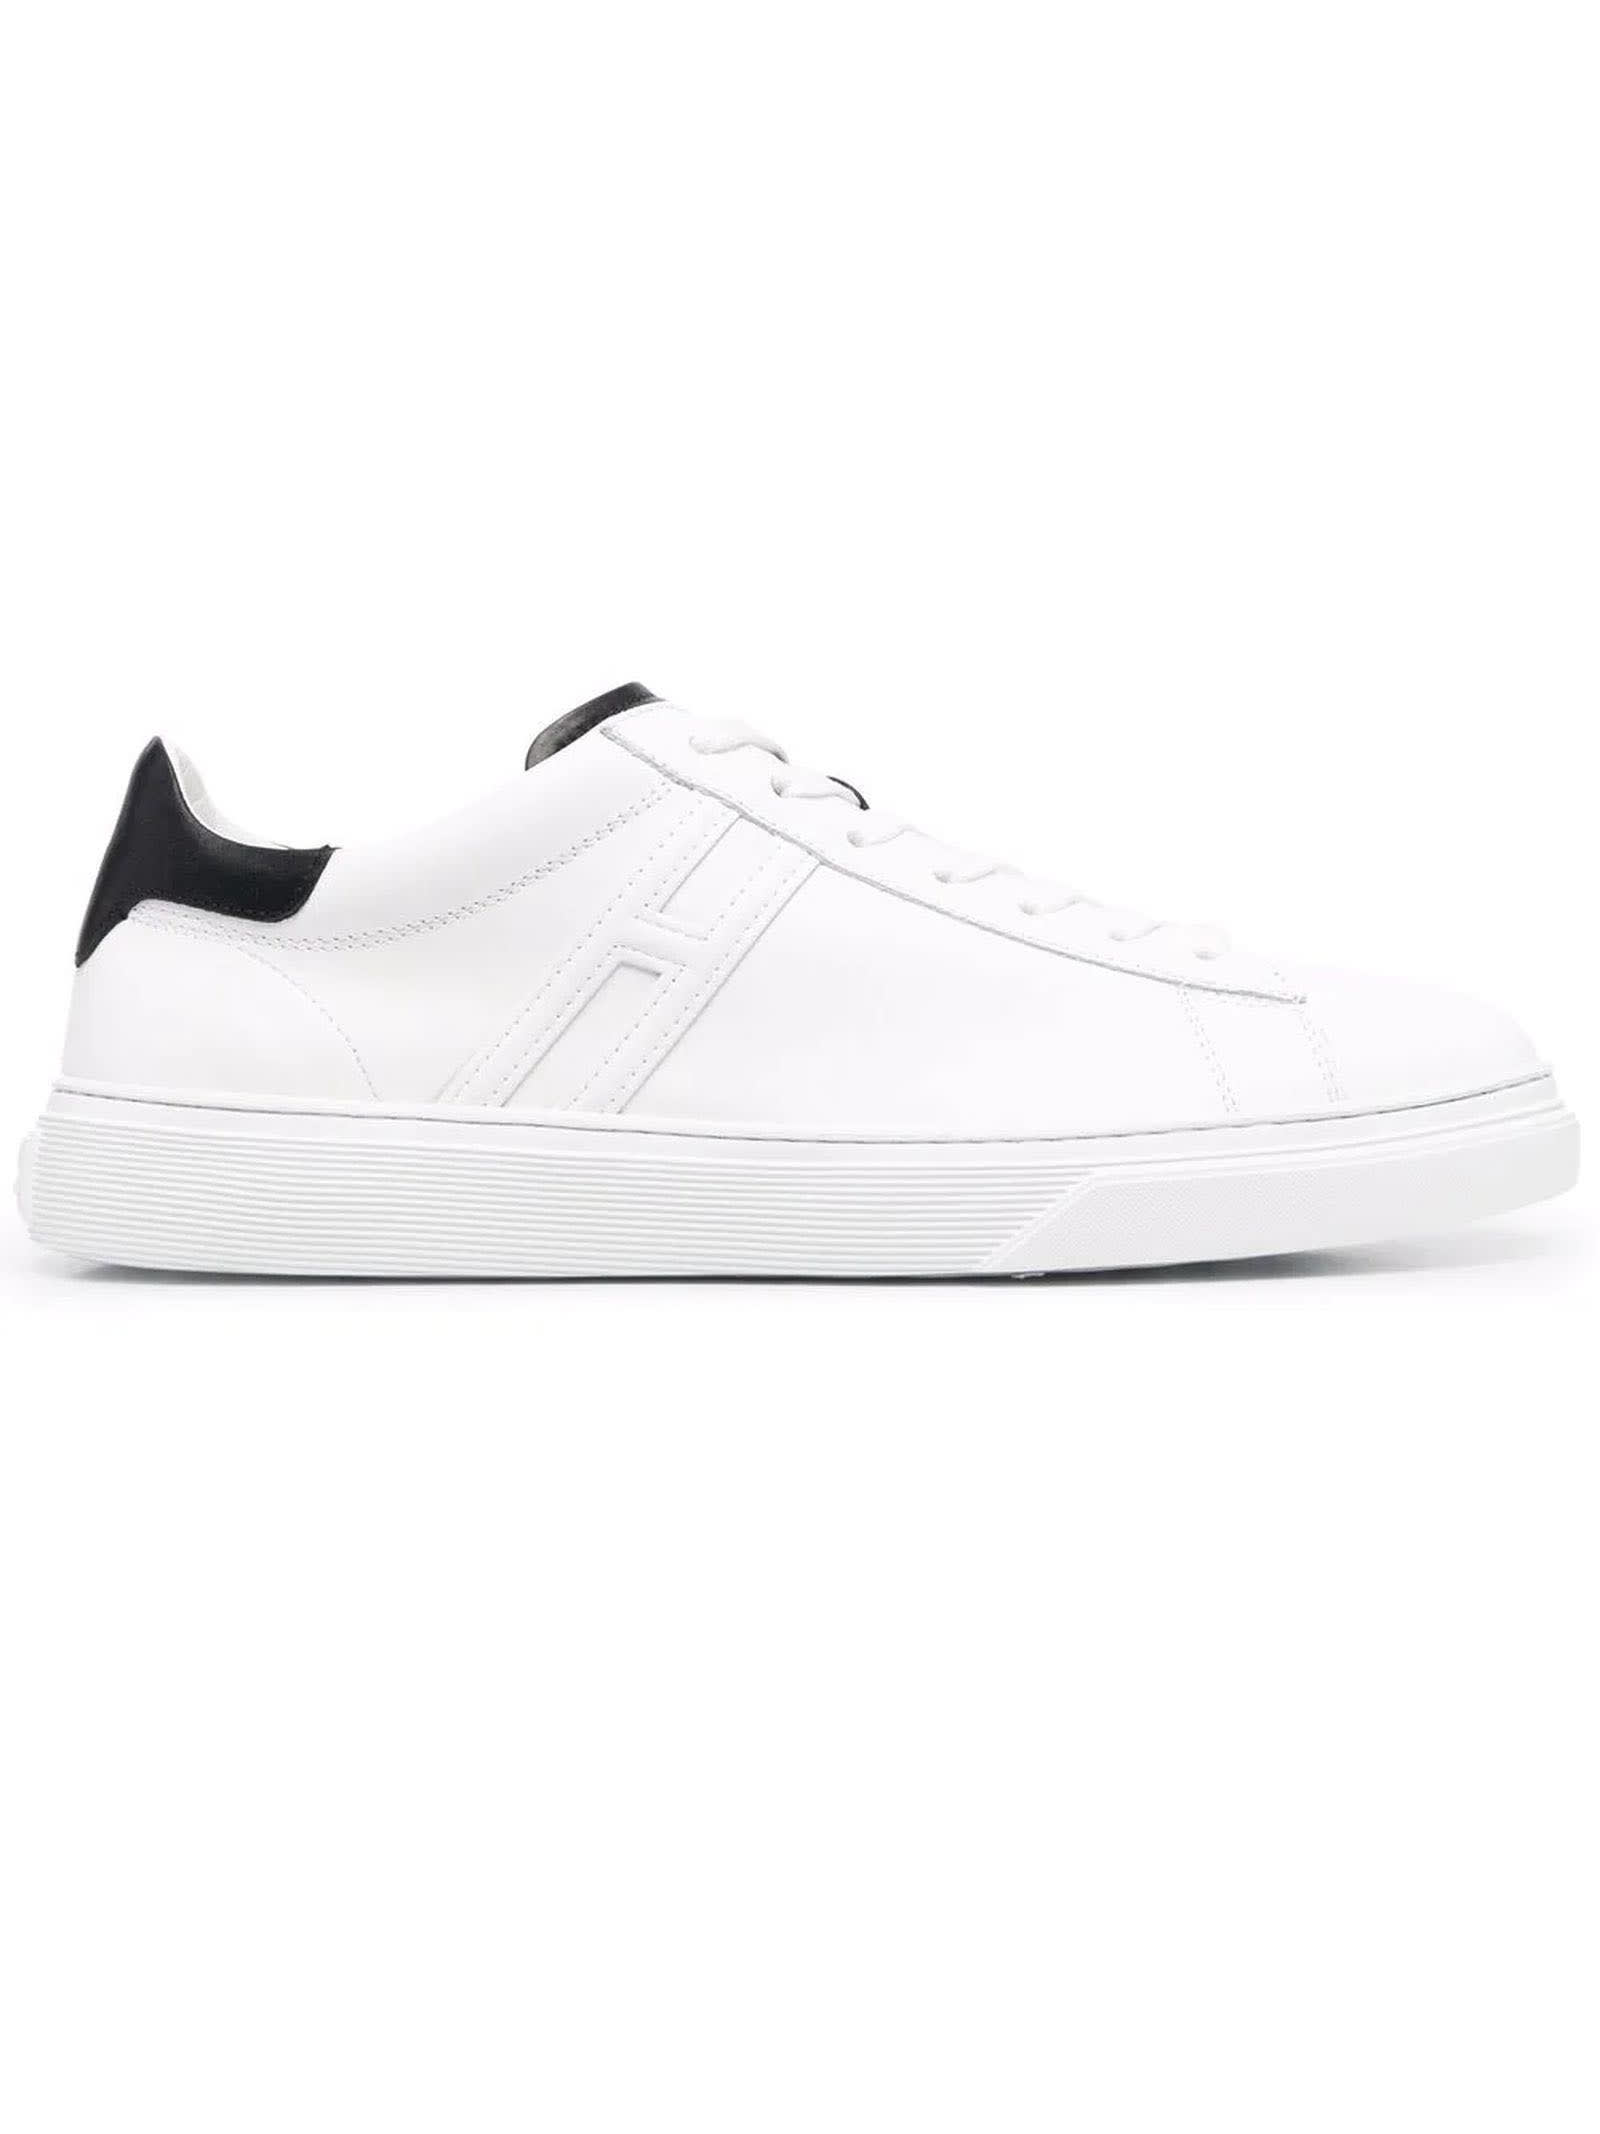 Hogan Sneakers H365 Black White